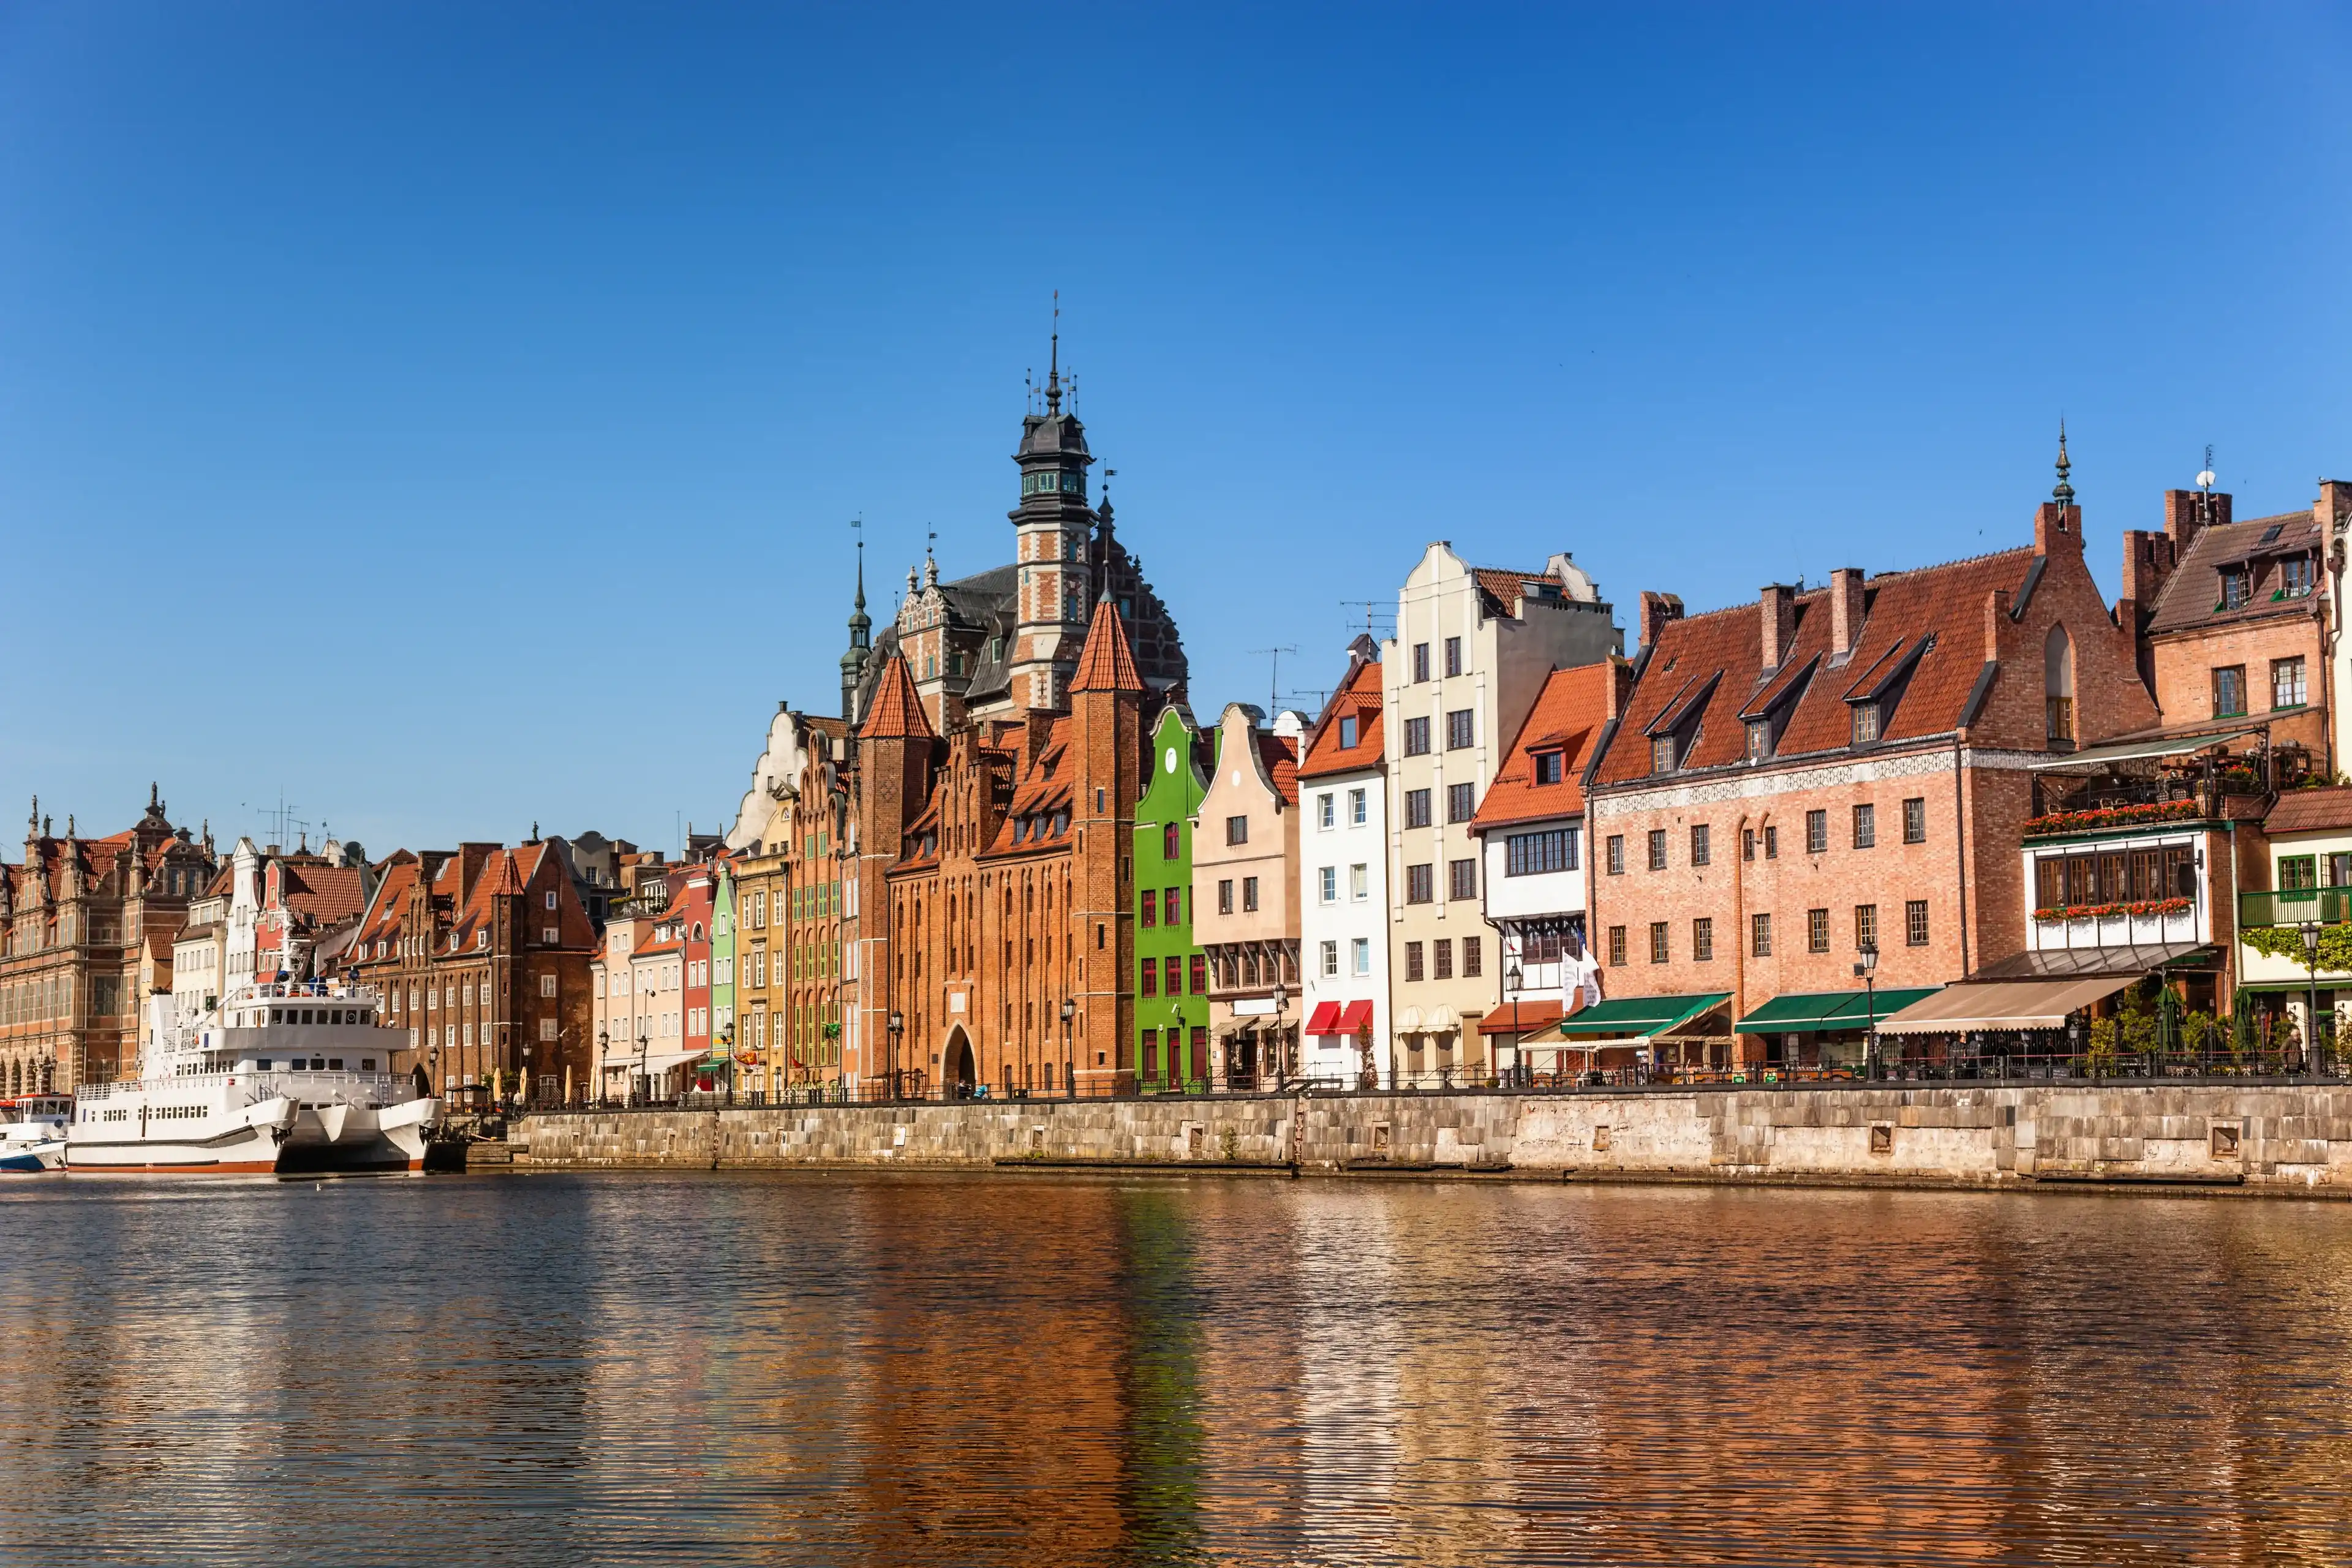 Best Gdańsk hotels. Cheap hotels in Gdańsk, Poland